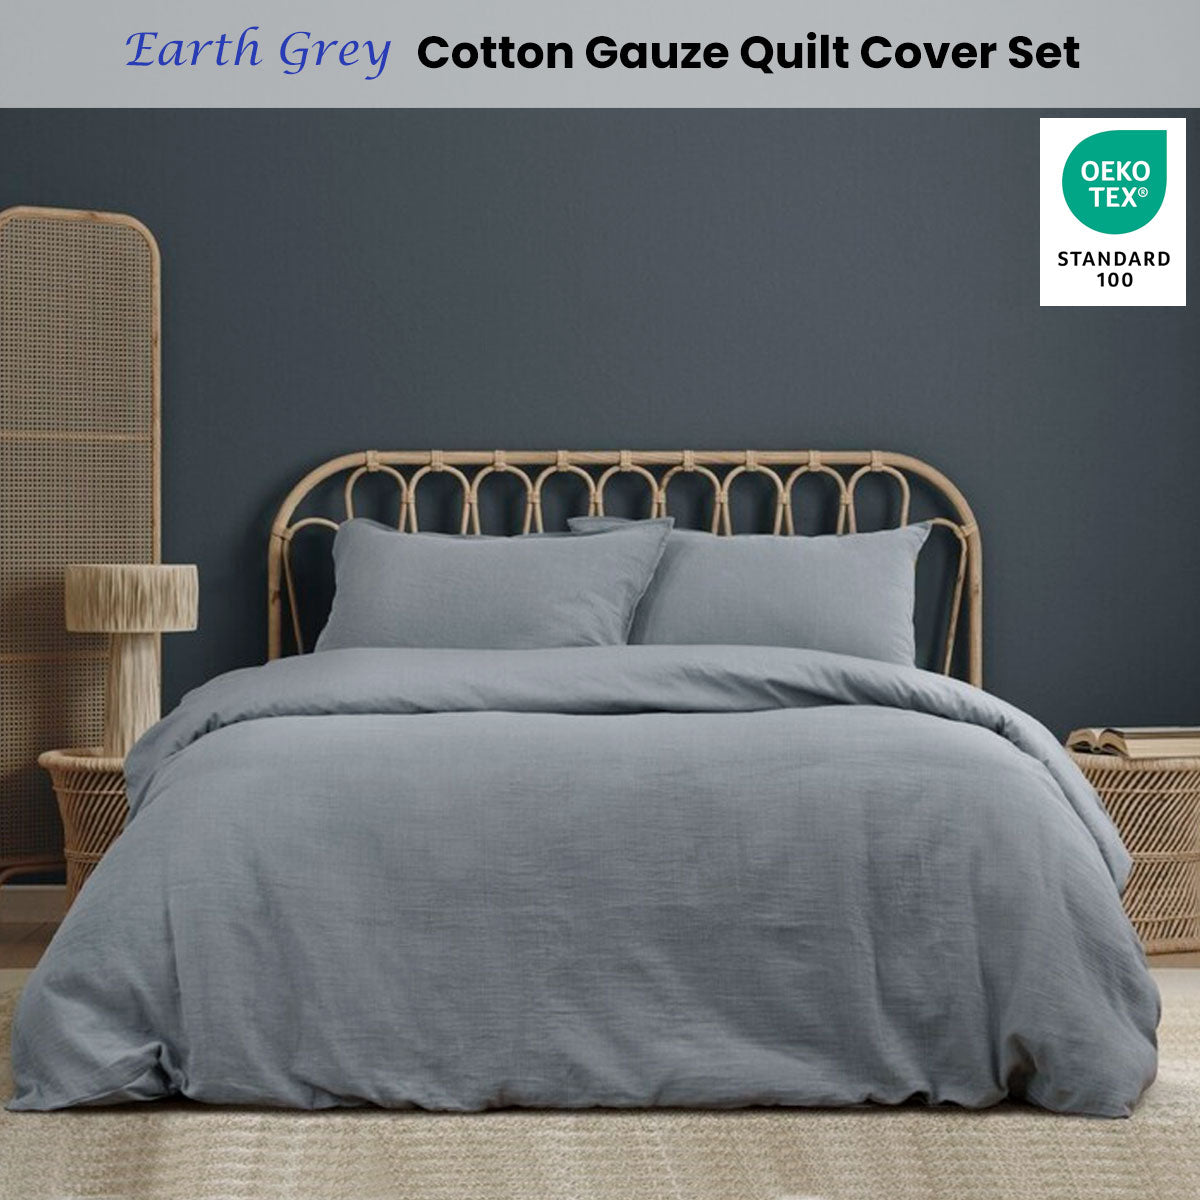 QUEEN Cotton Gauze Quilt Cover Set - Earth Grey